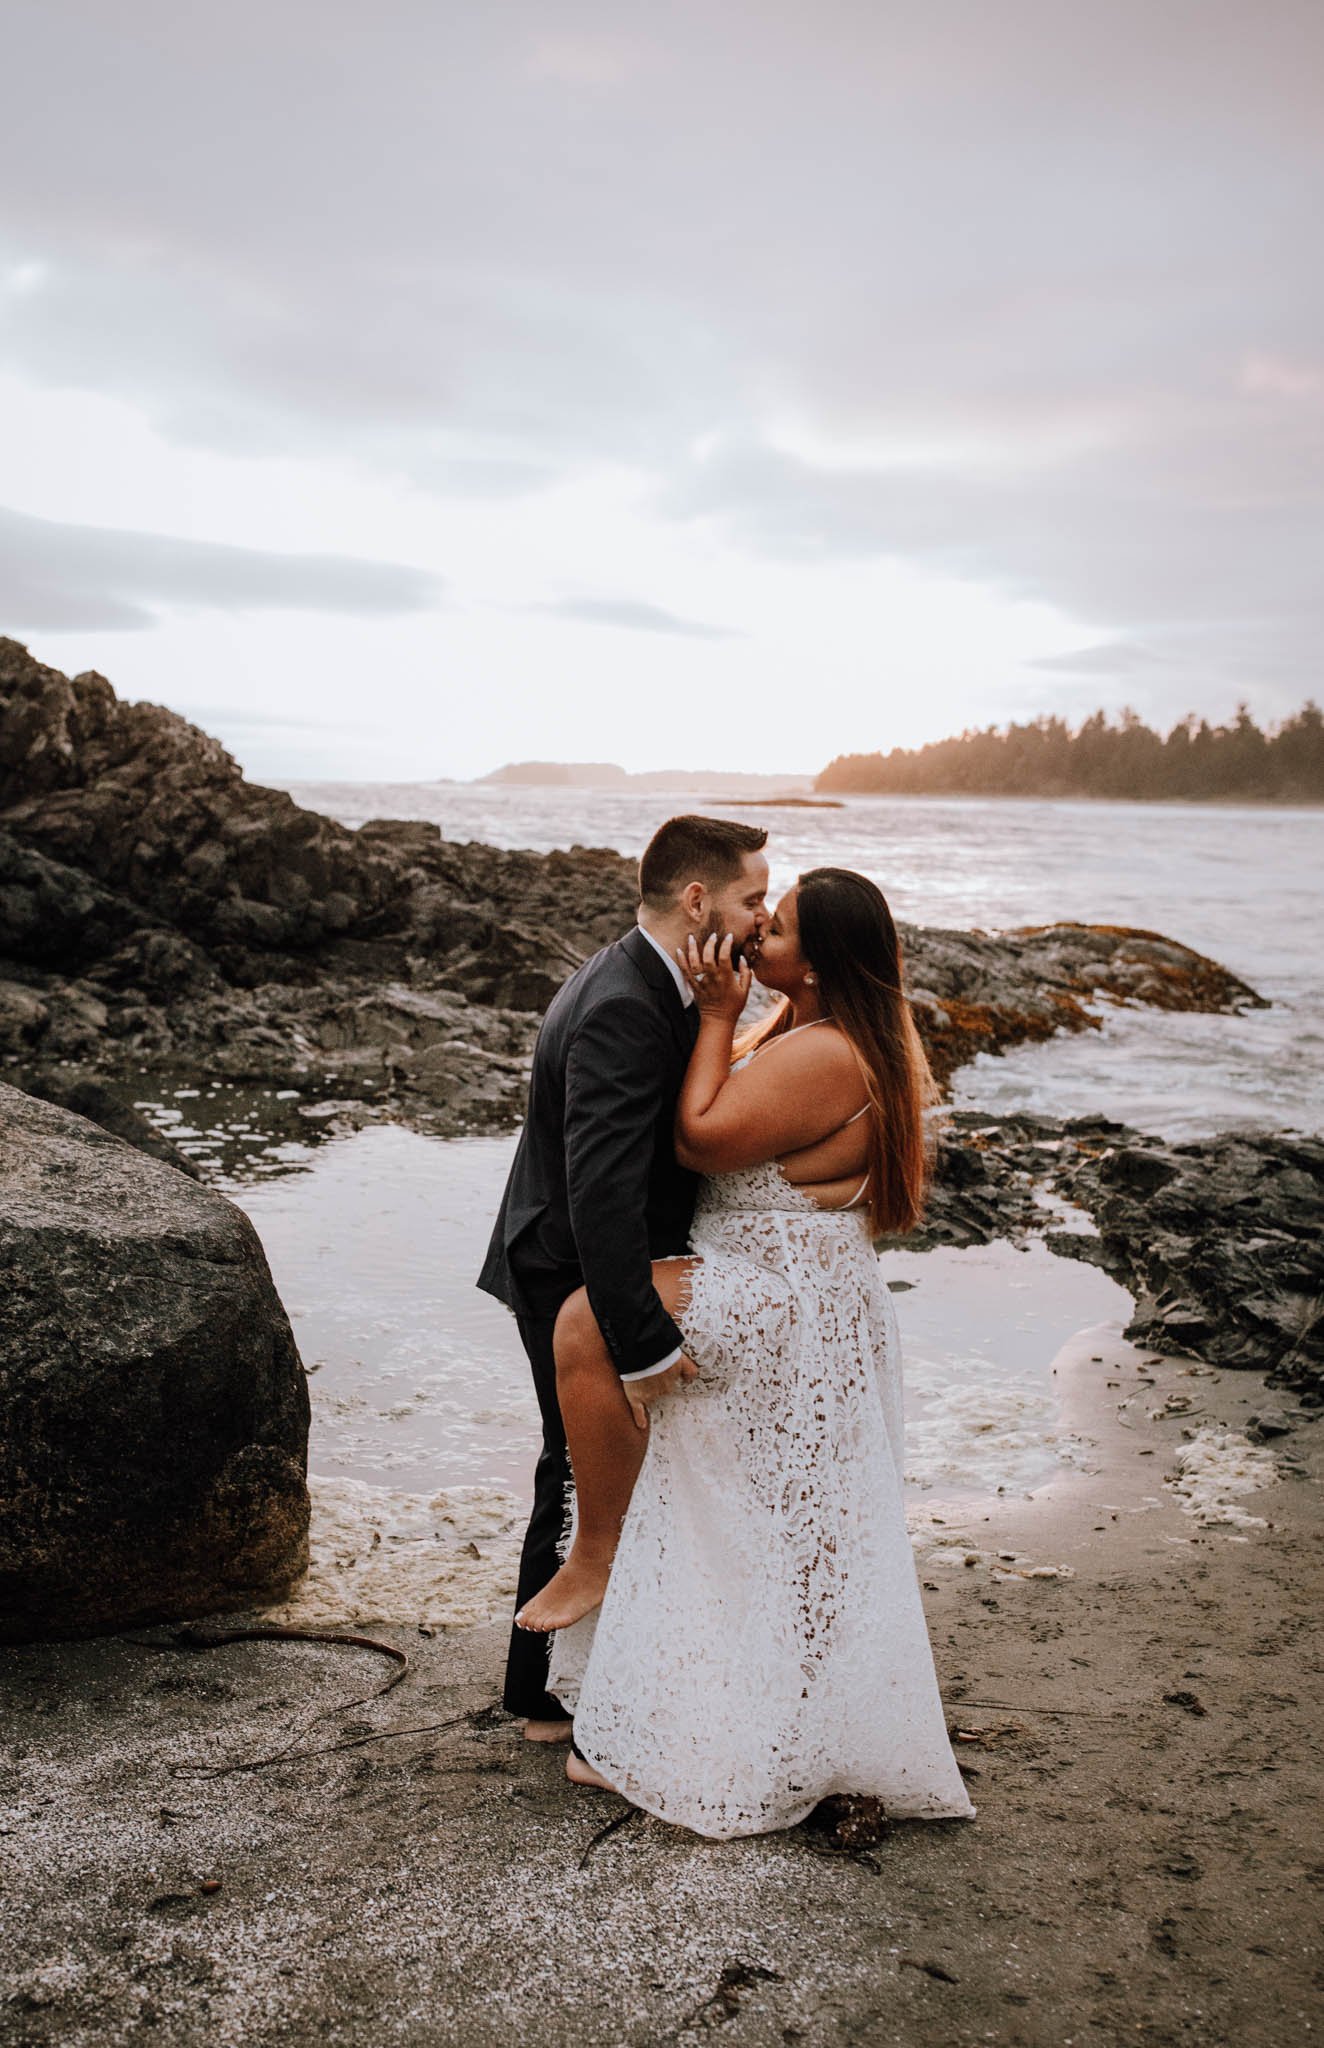 Clarize and David Elopement - Tofino Vancouver Island British Columbia - Elyse Anna Photography-2790.jpg